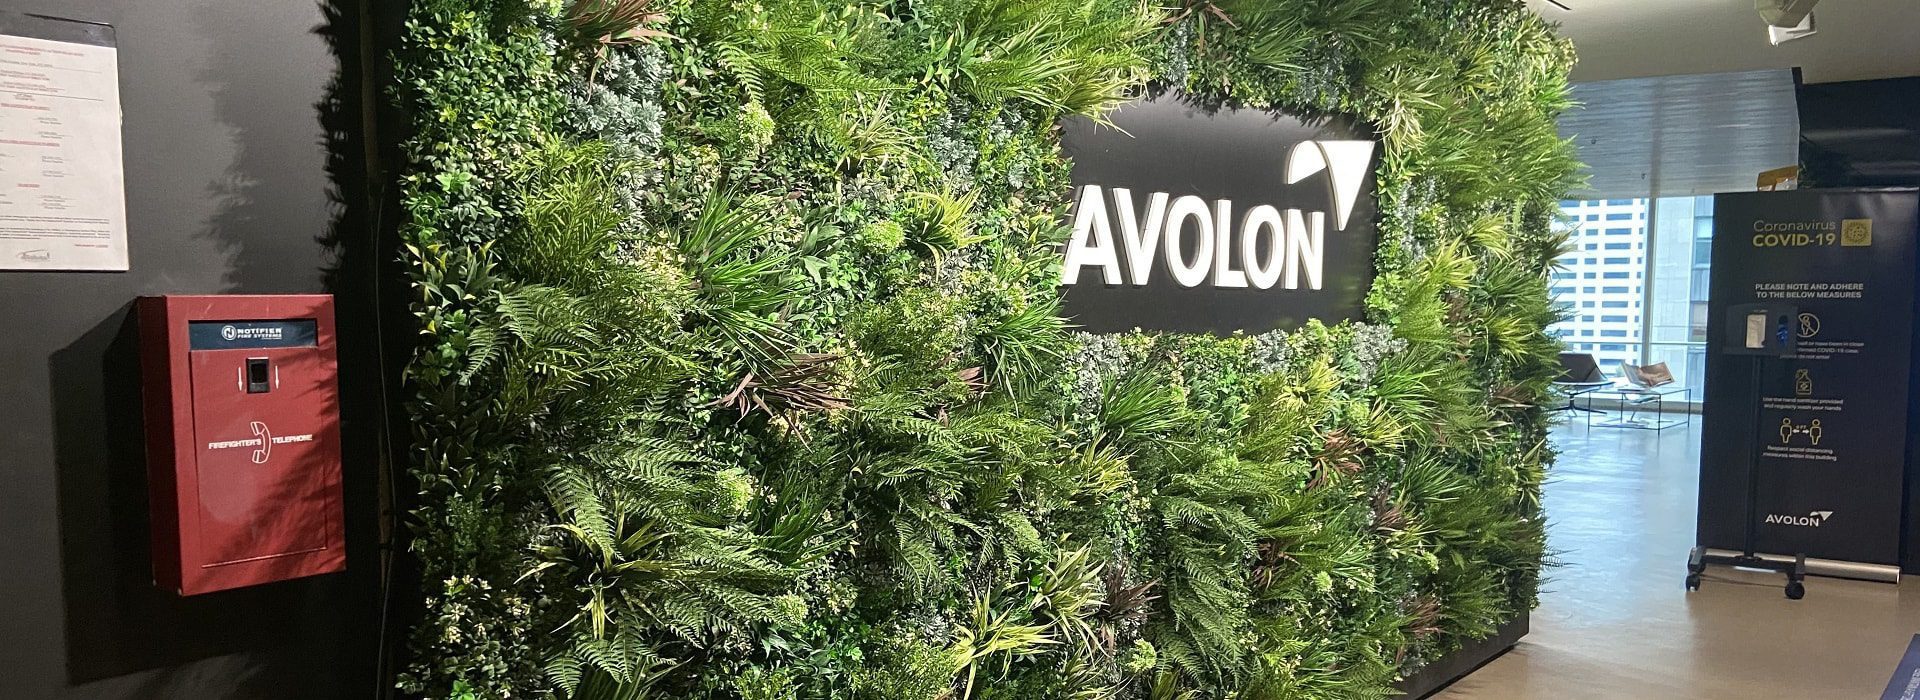 Avolon Office Green Wall